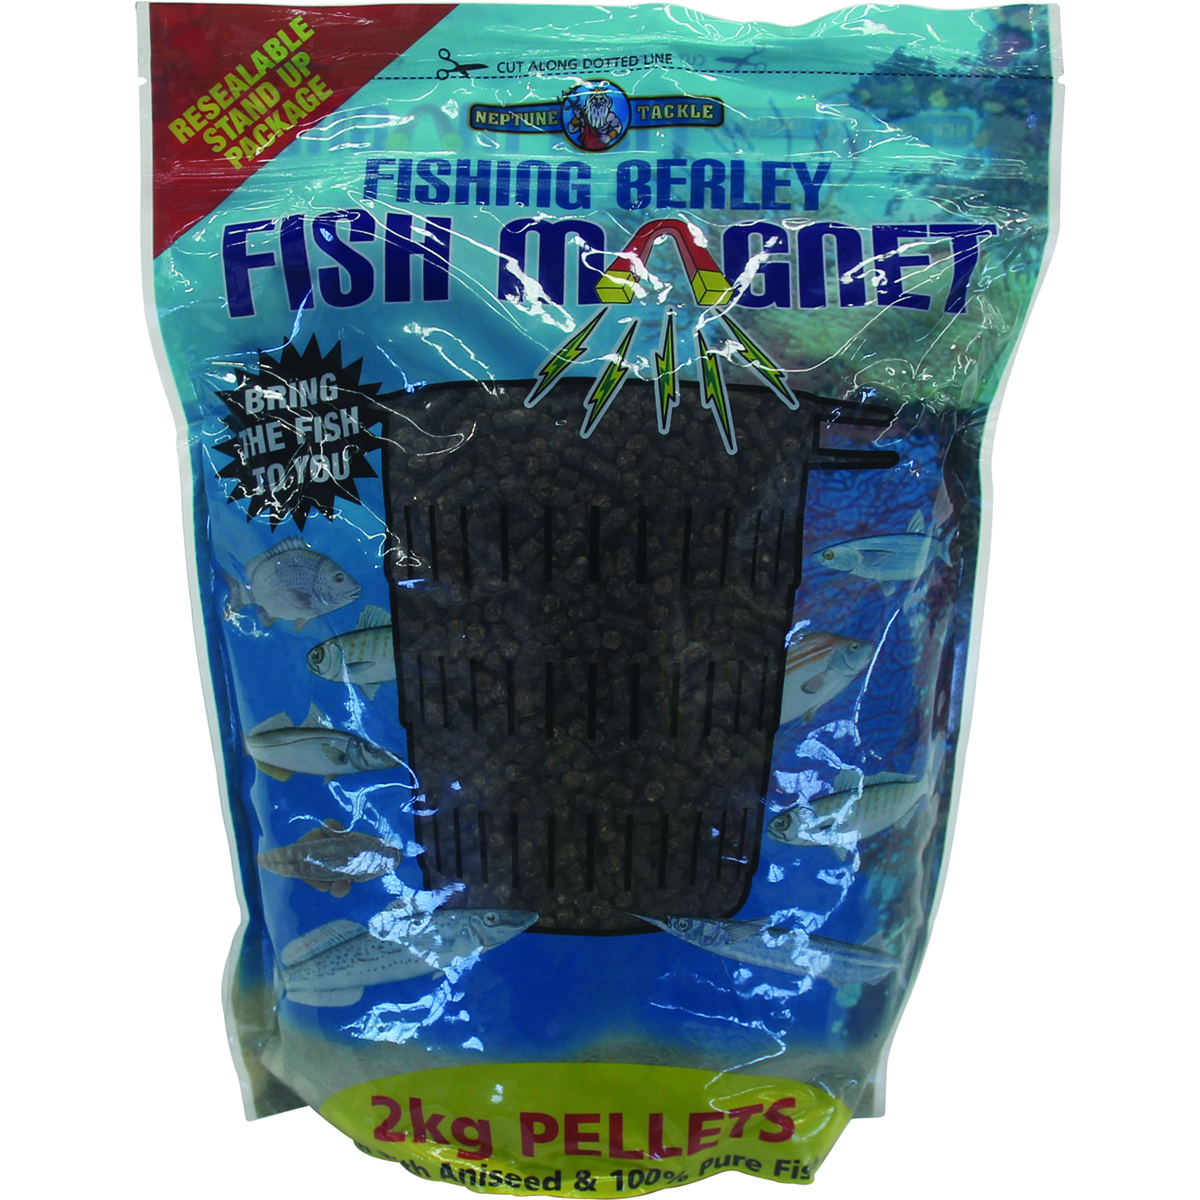 Neptune Fish Magnet Burley Pellets 2kg